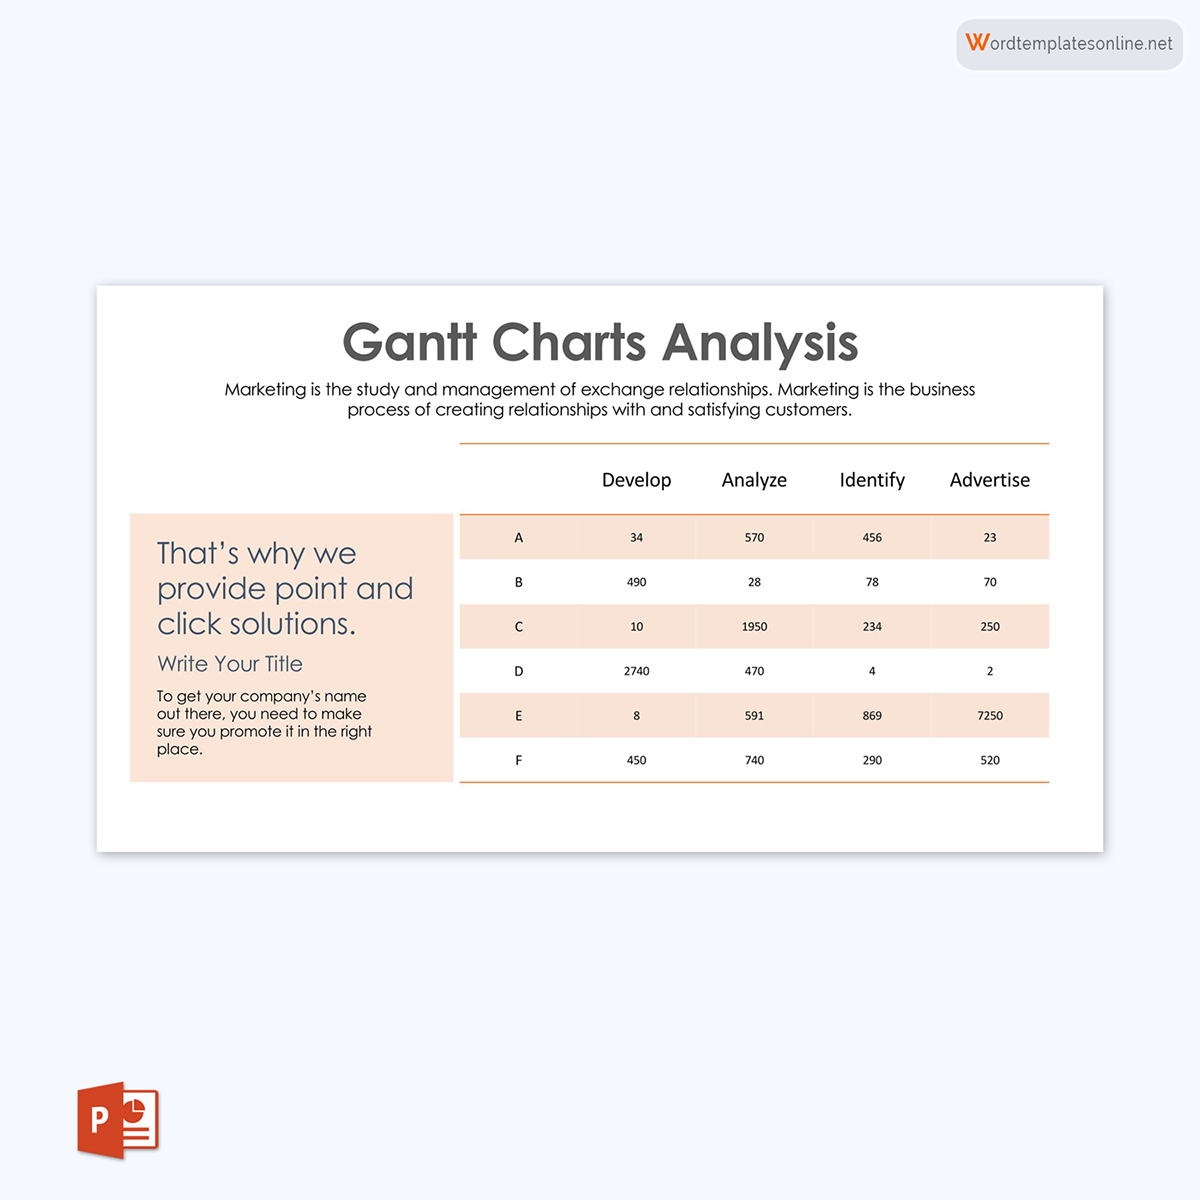 Professional Editable Gantt Chart Analysis Template 02 as PowerPoint Slides